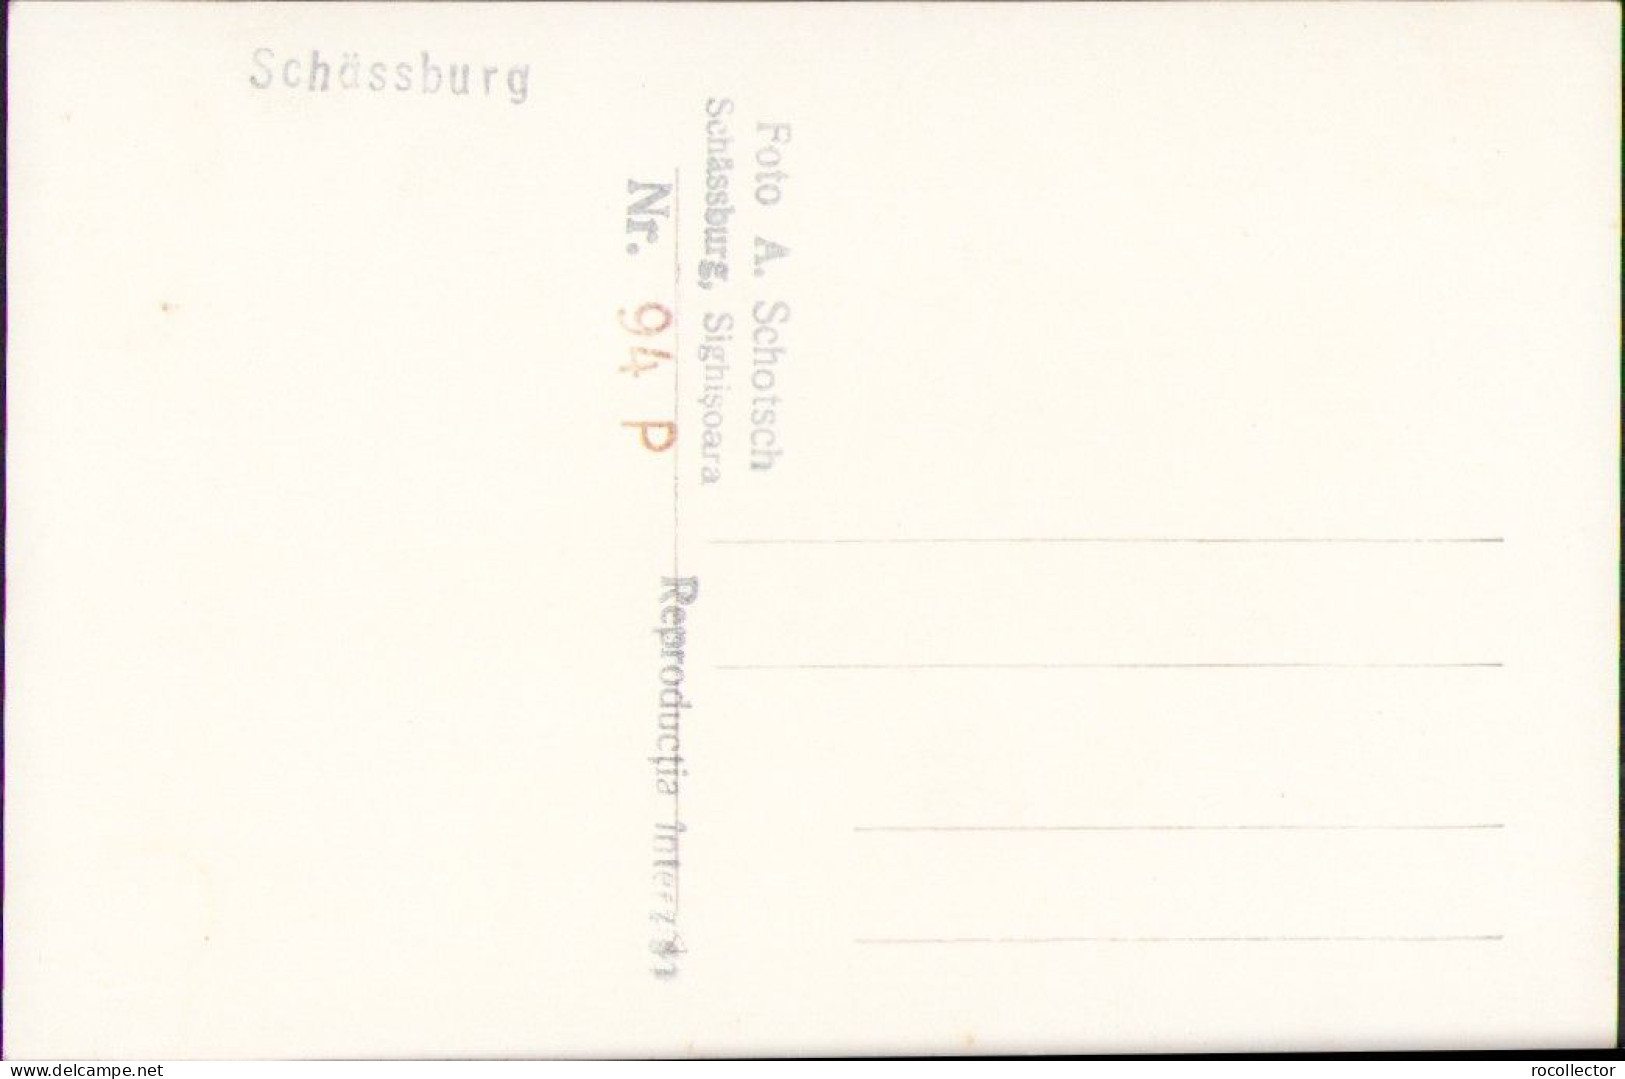 Schässburg Segesvar Sighișoara Studio Albert Schotsch Postcard CP359 - Rumania